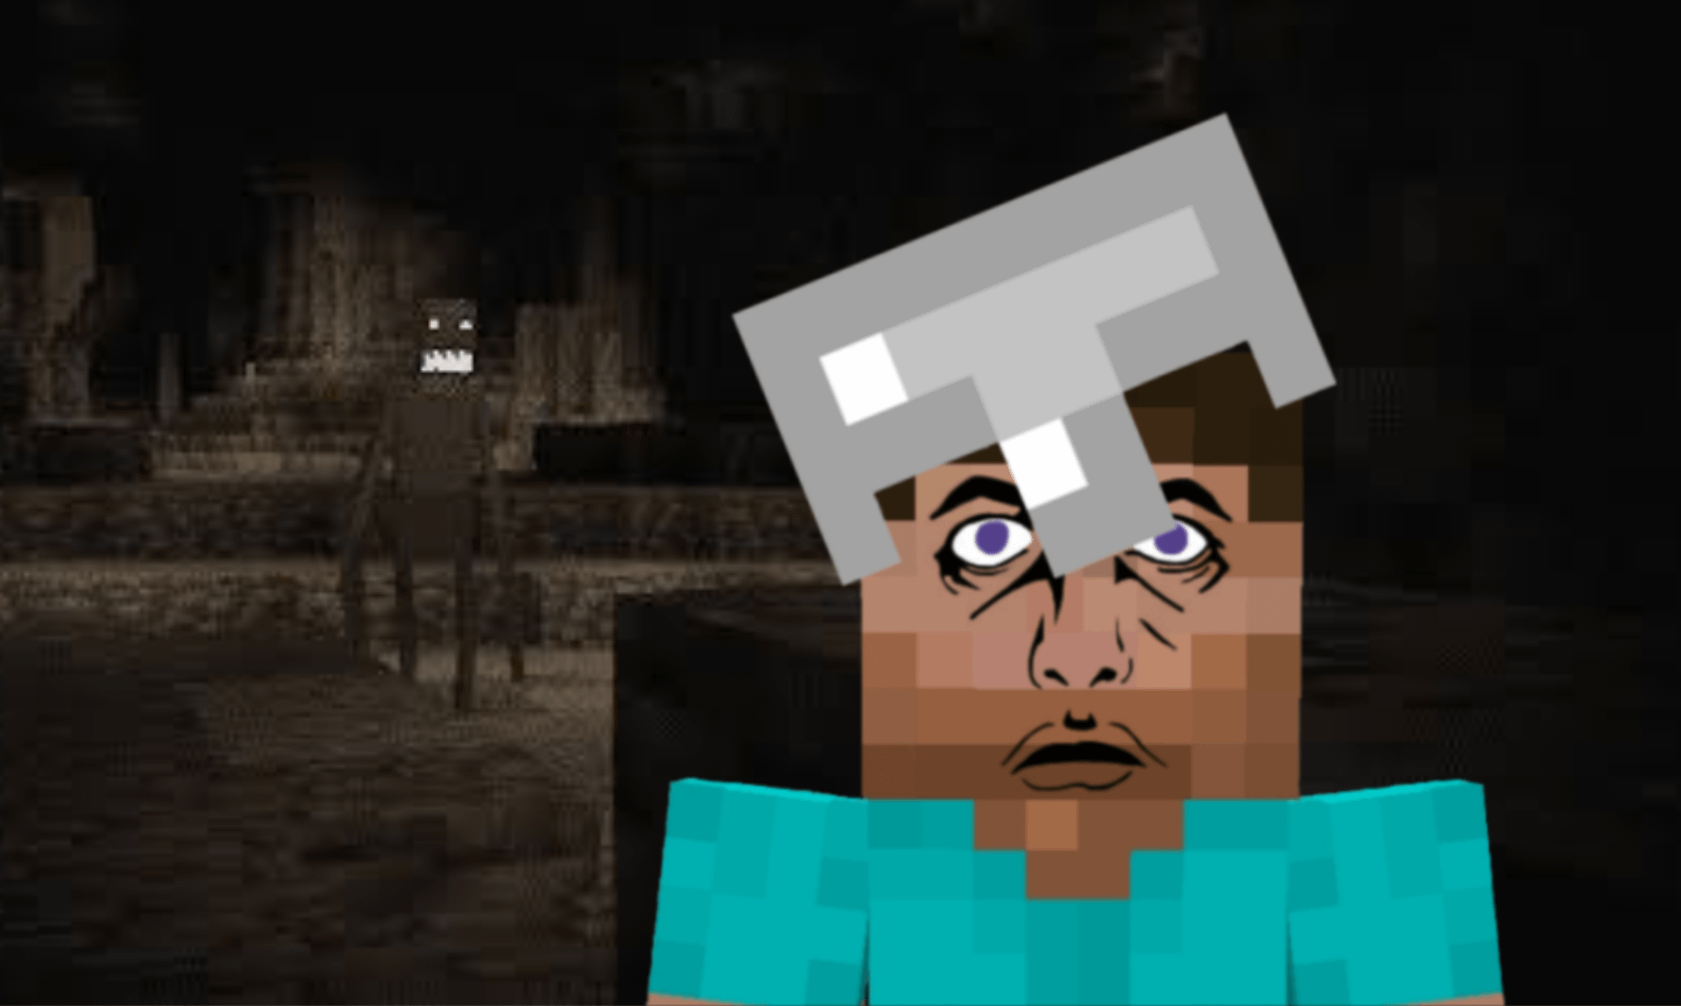 Minecraft Memes - "Creepy cave dweller in horror survival got me shook"